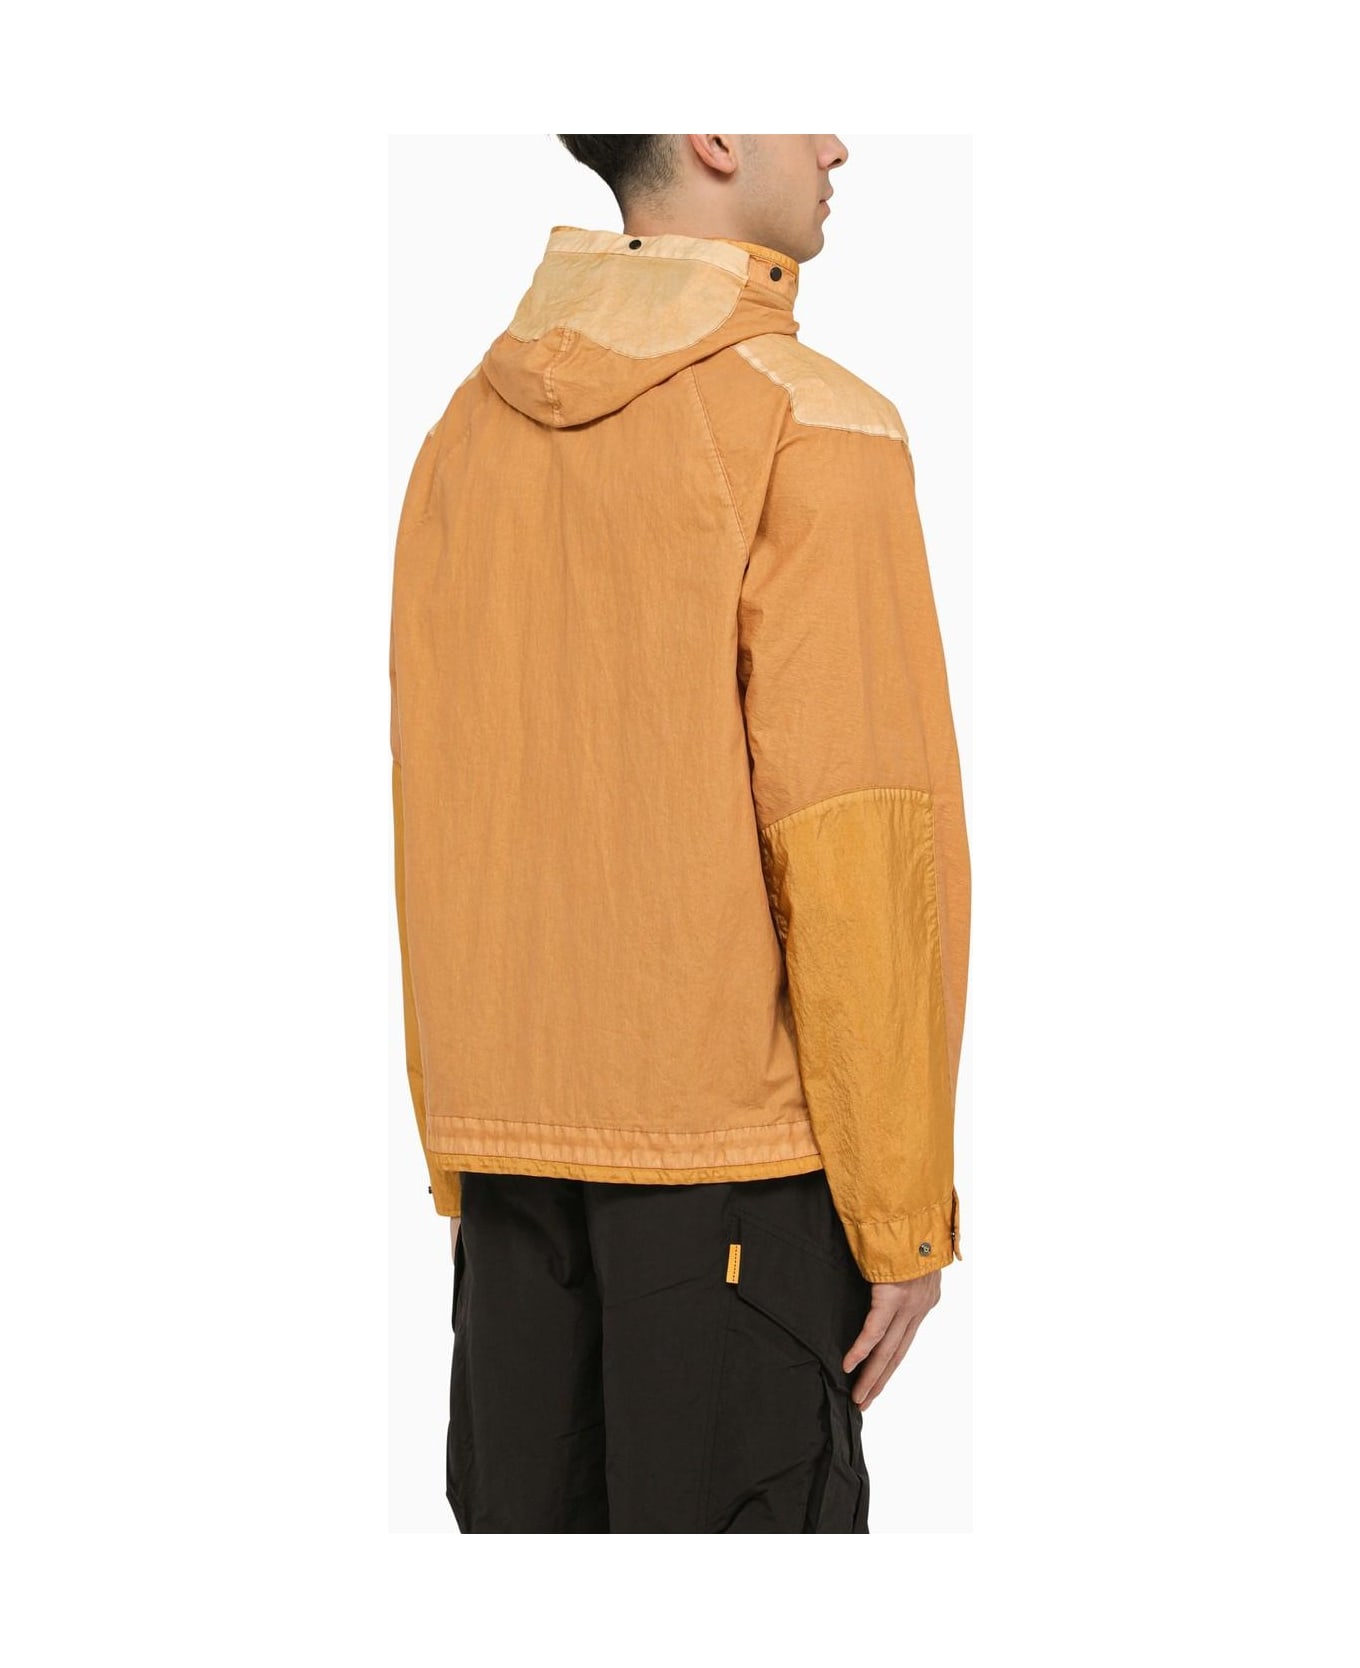 C.P. Company Lightweight Cotton Blend Pastry Shell Jacket - Orange